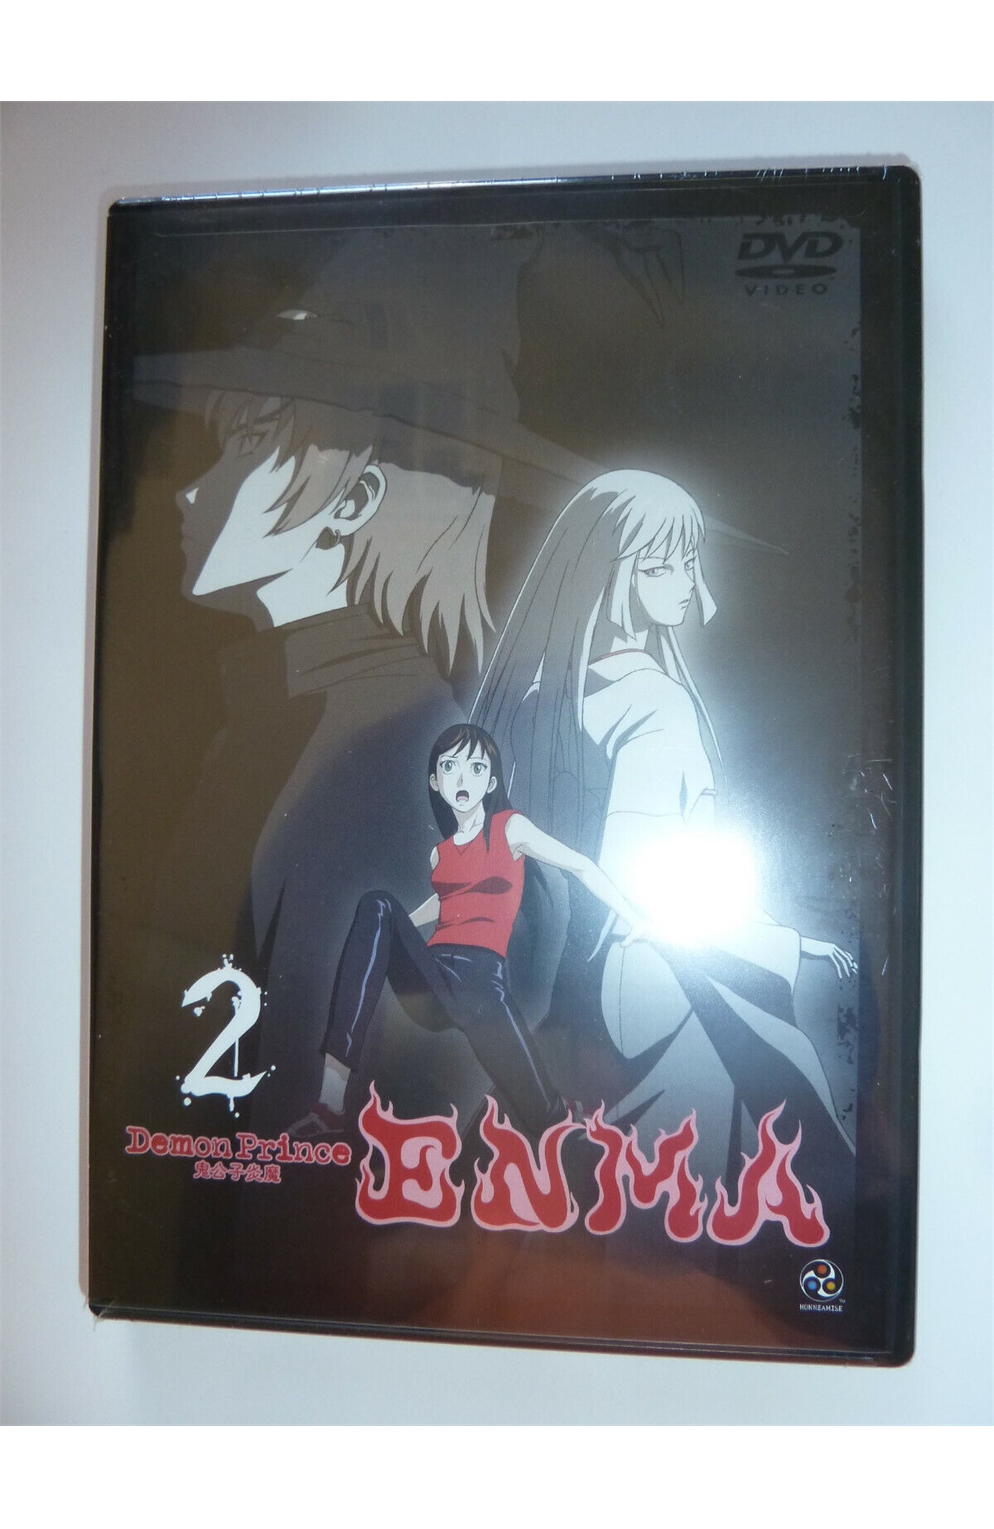 Demon Prince Enma Volume 2 DVD